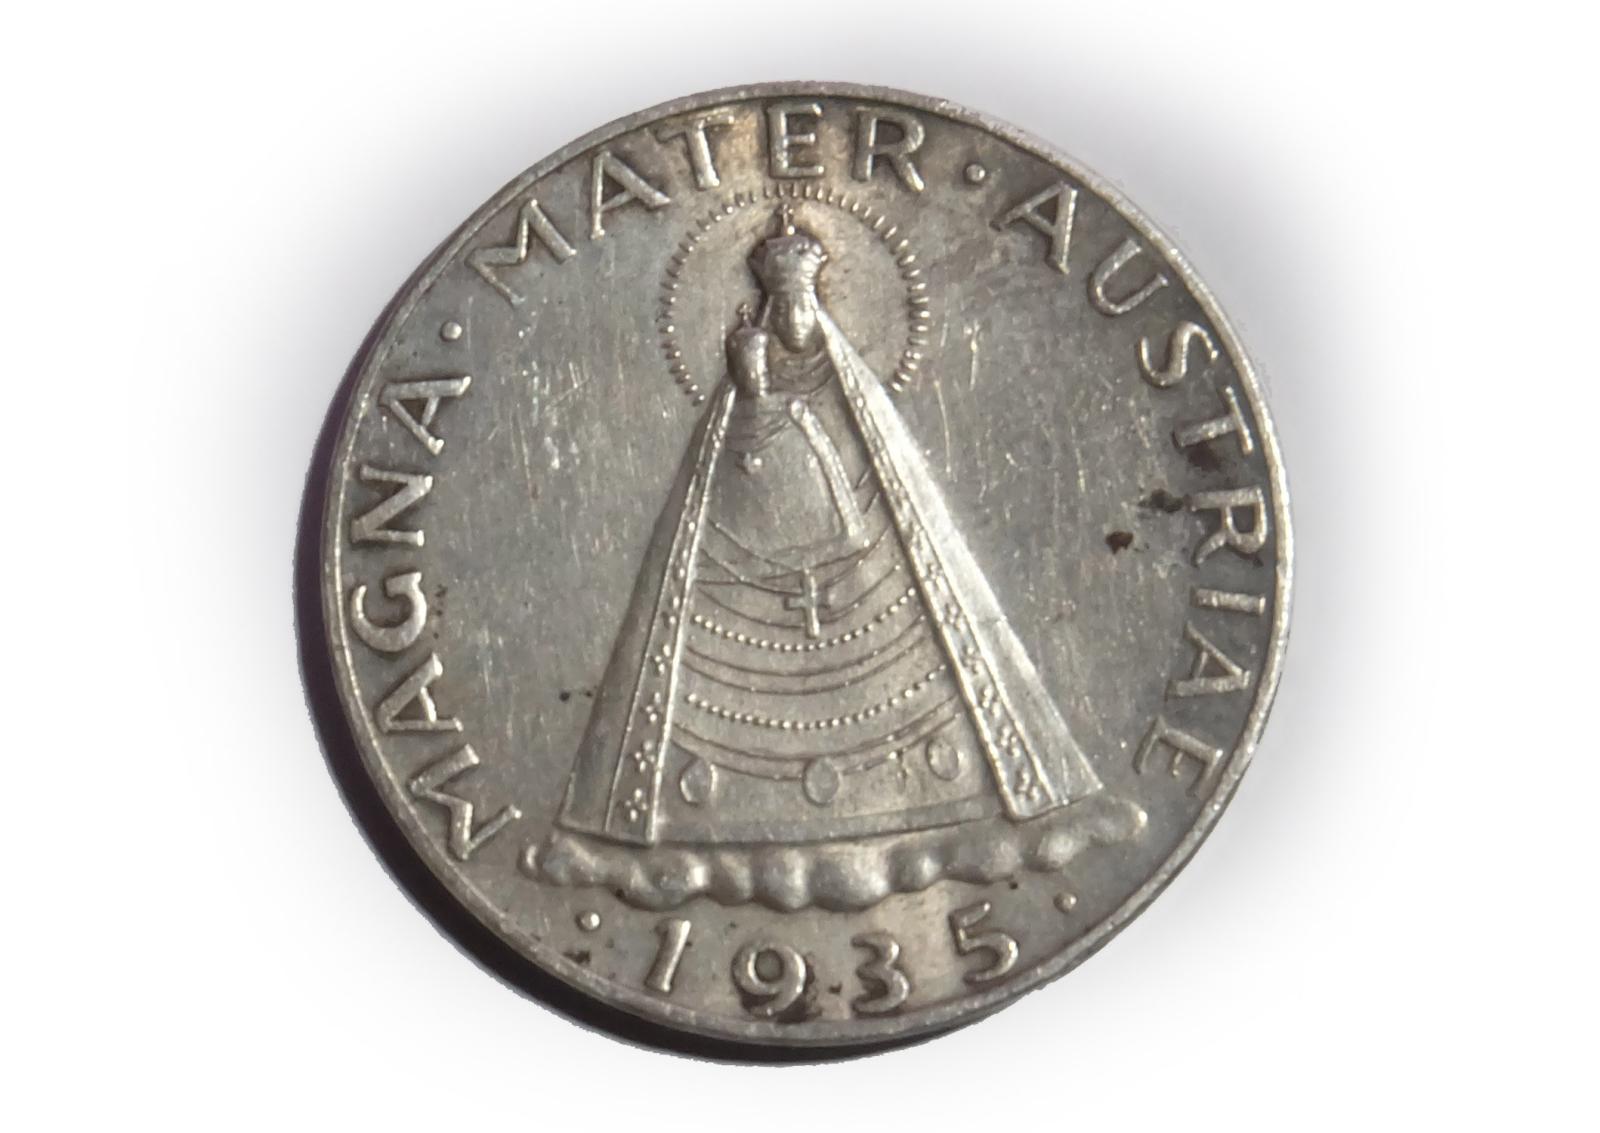 Strieborná minca 5 schilling Magna Mater 0/0 1935